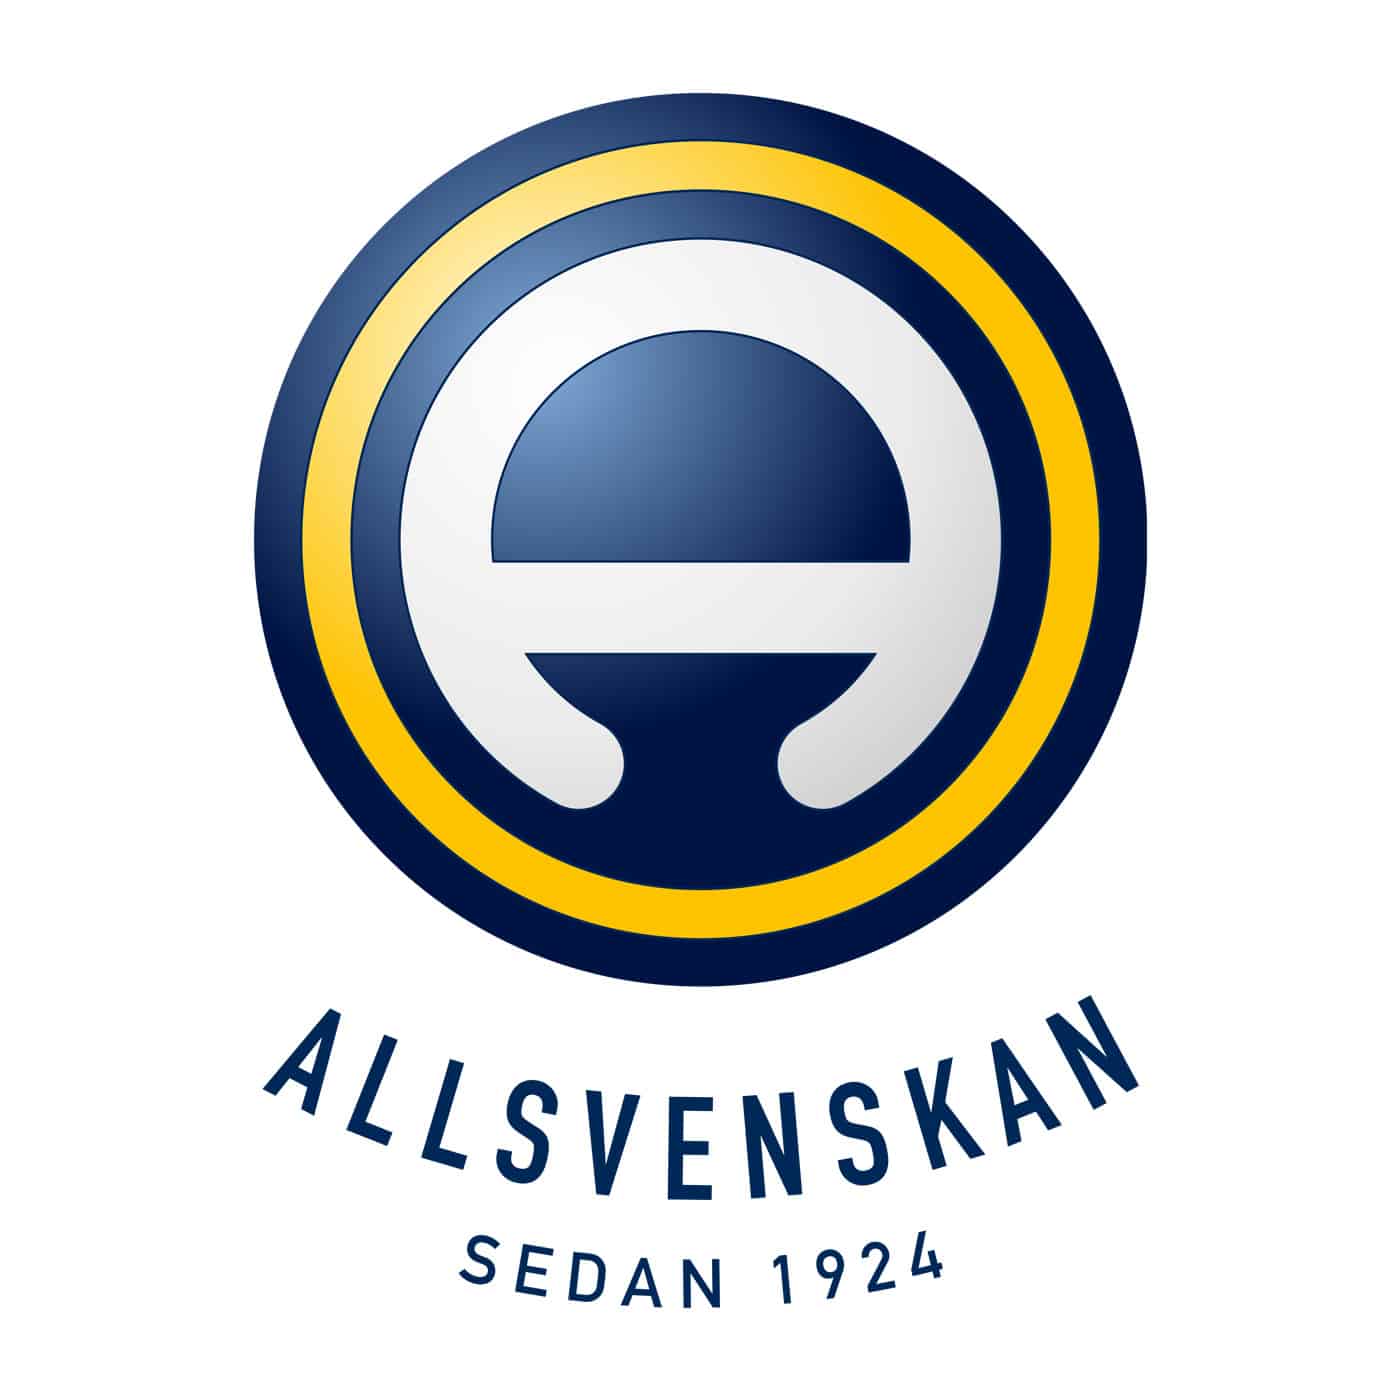 Allsvenskan bild